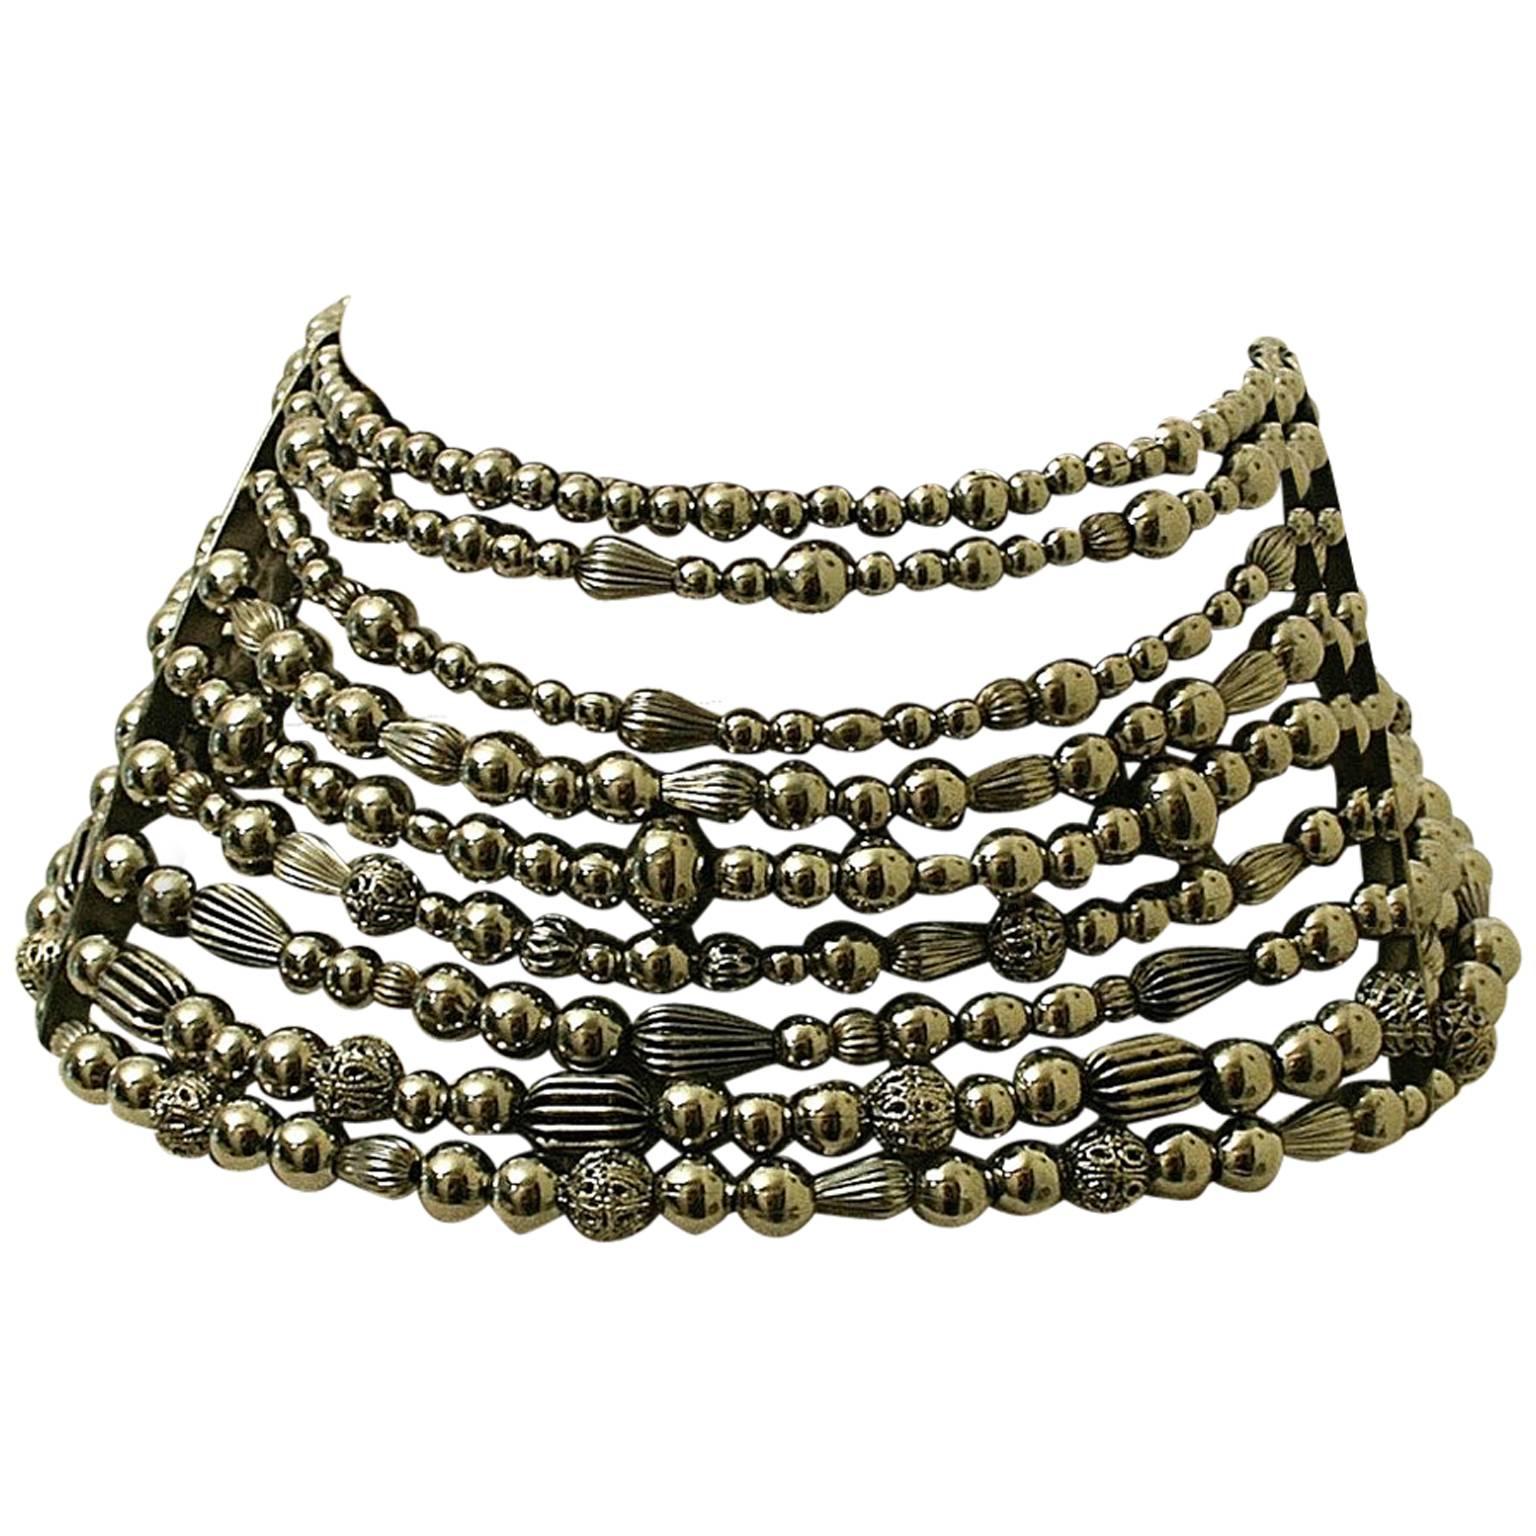 John Galliano for Christian Dior 1990s Maasai Inspired Vintage Choker Necklace